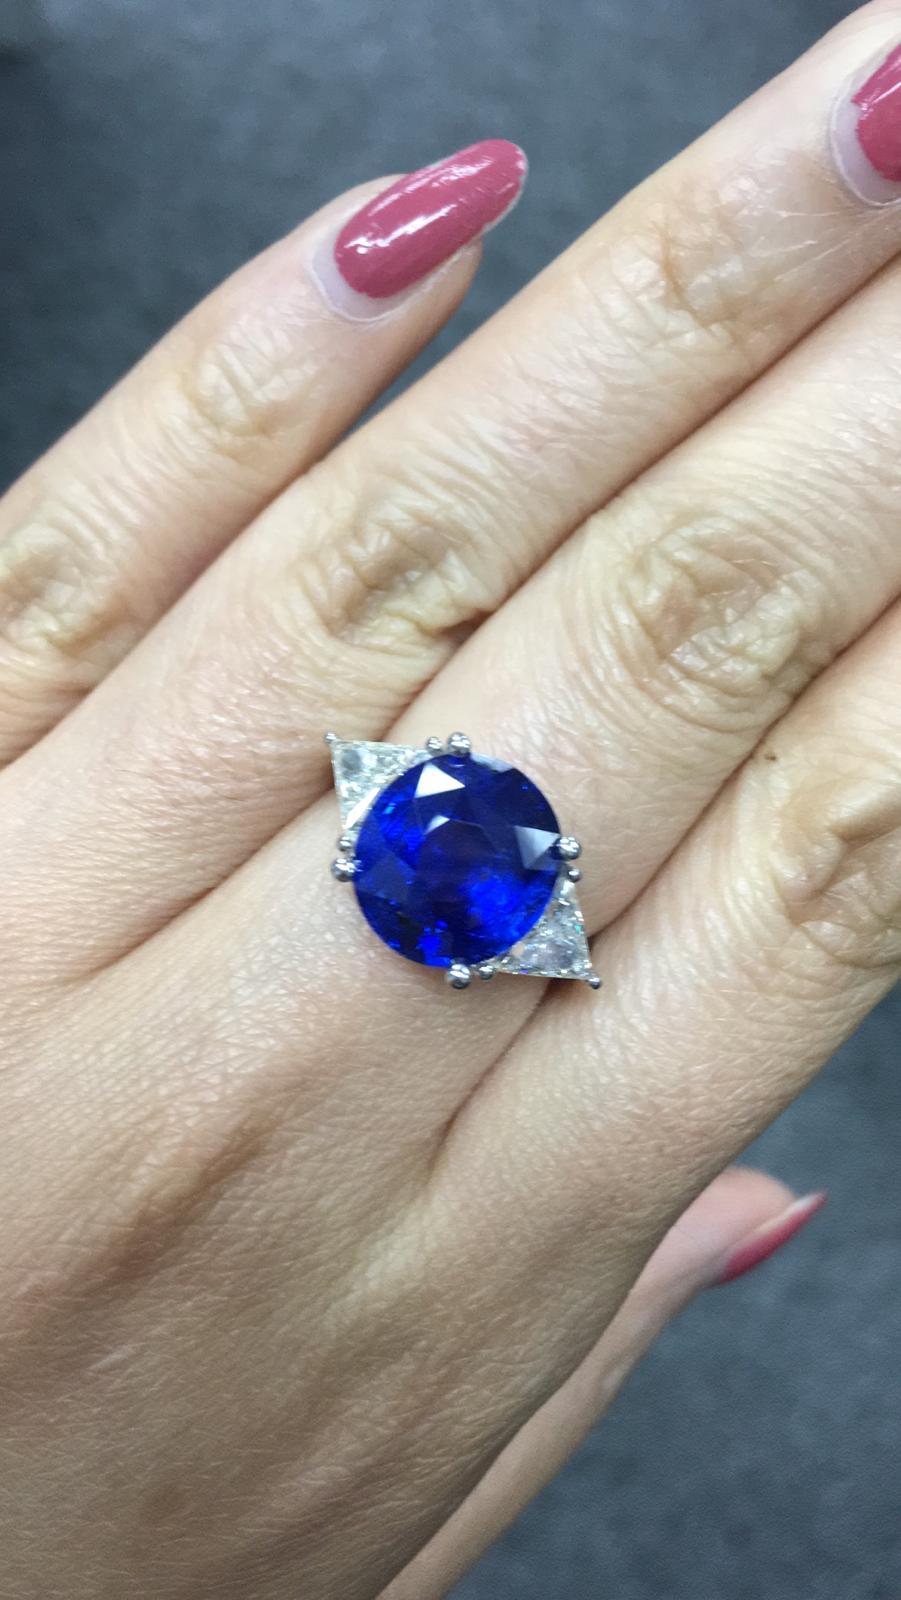 Primary Stone: Sapphire ( Sri Lanka )
Shape : Oval Cut
Sapphire Weight: 7.05 Carats 
Measurements Sapphire: 11.79mm x 10.83mm x 6.55mm
Color: Vivid Blue
Accent Stones: Genuine Diamond
Shape Or Cut Diamond: 2 Triangular Brilliants
Average